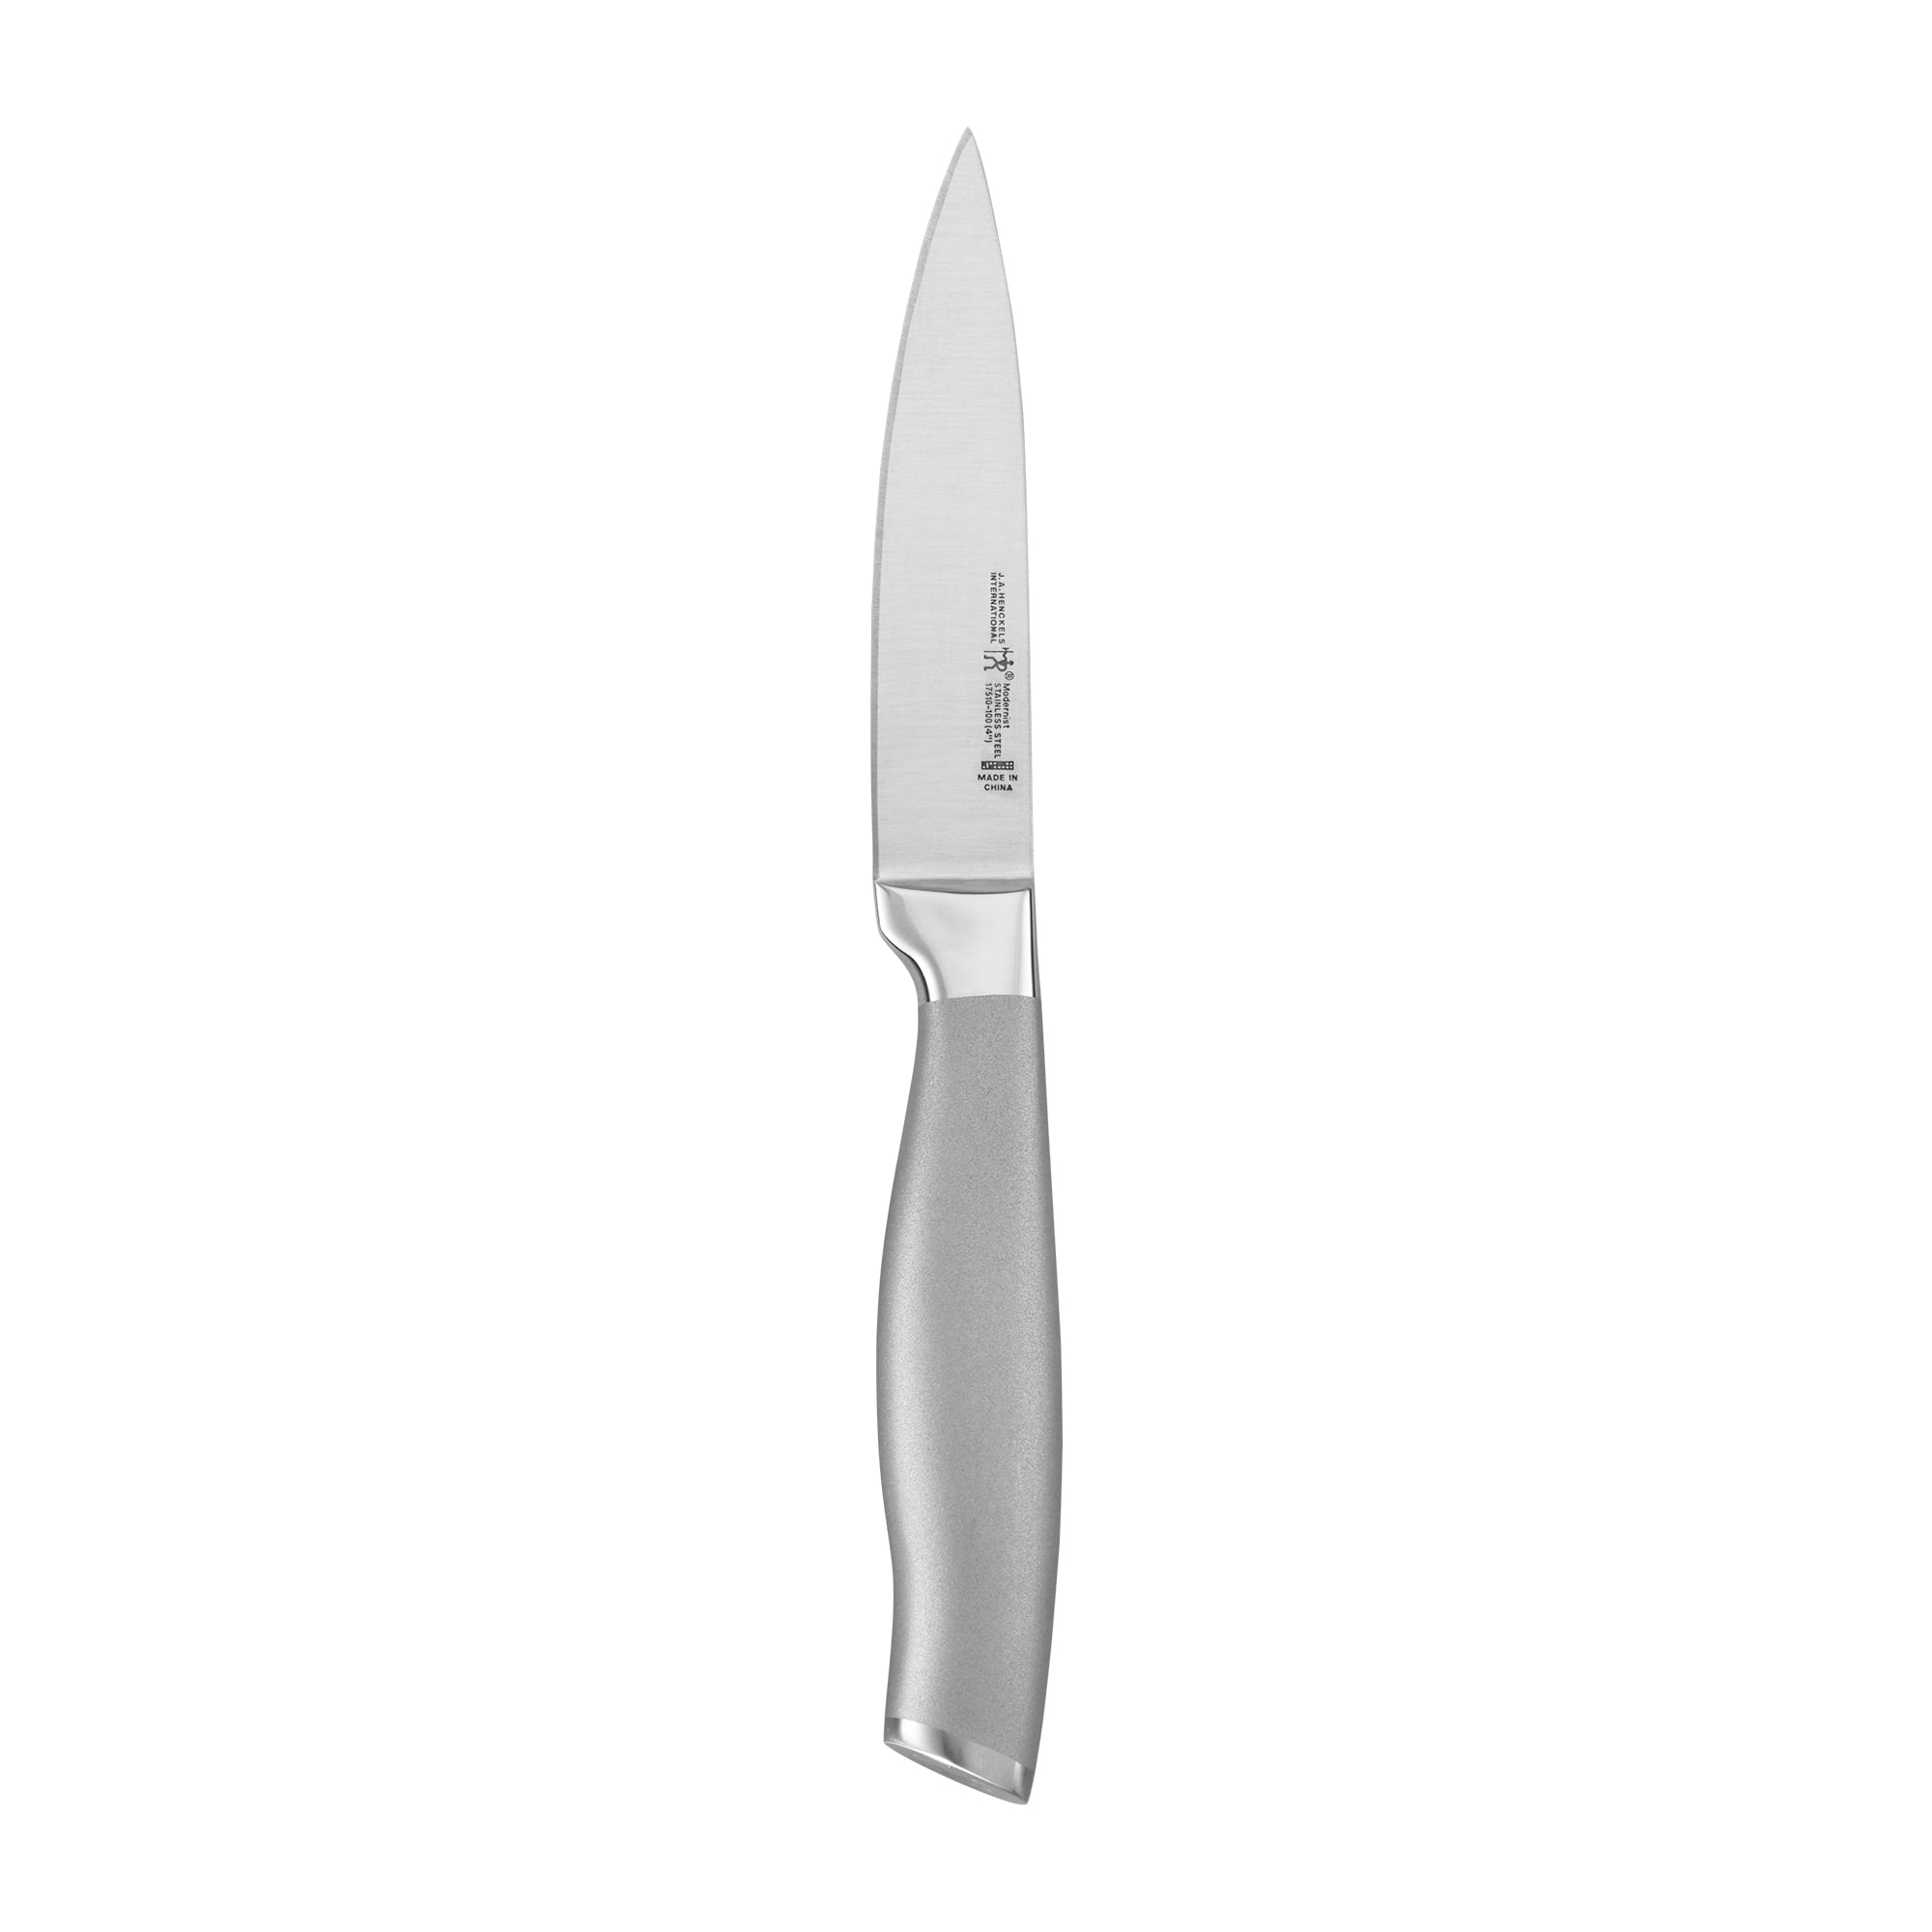 Kiwi Knives – Official Online Store Website